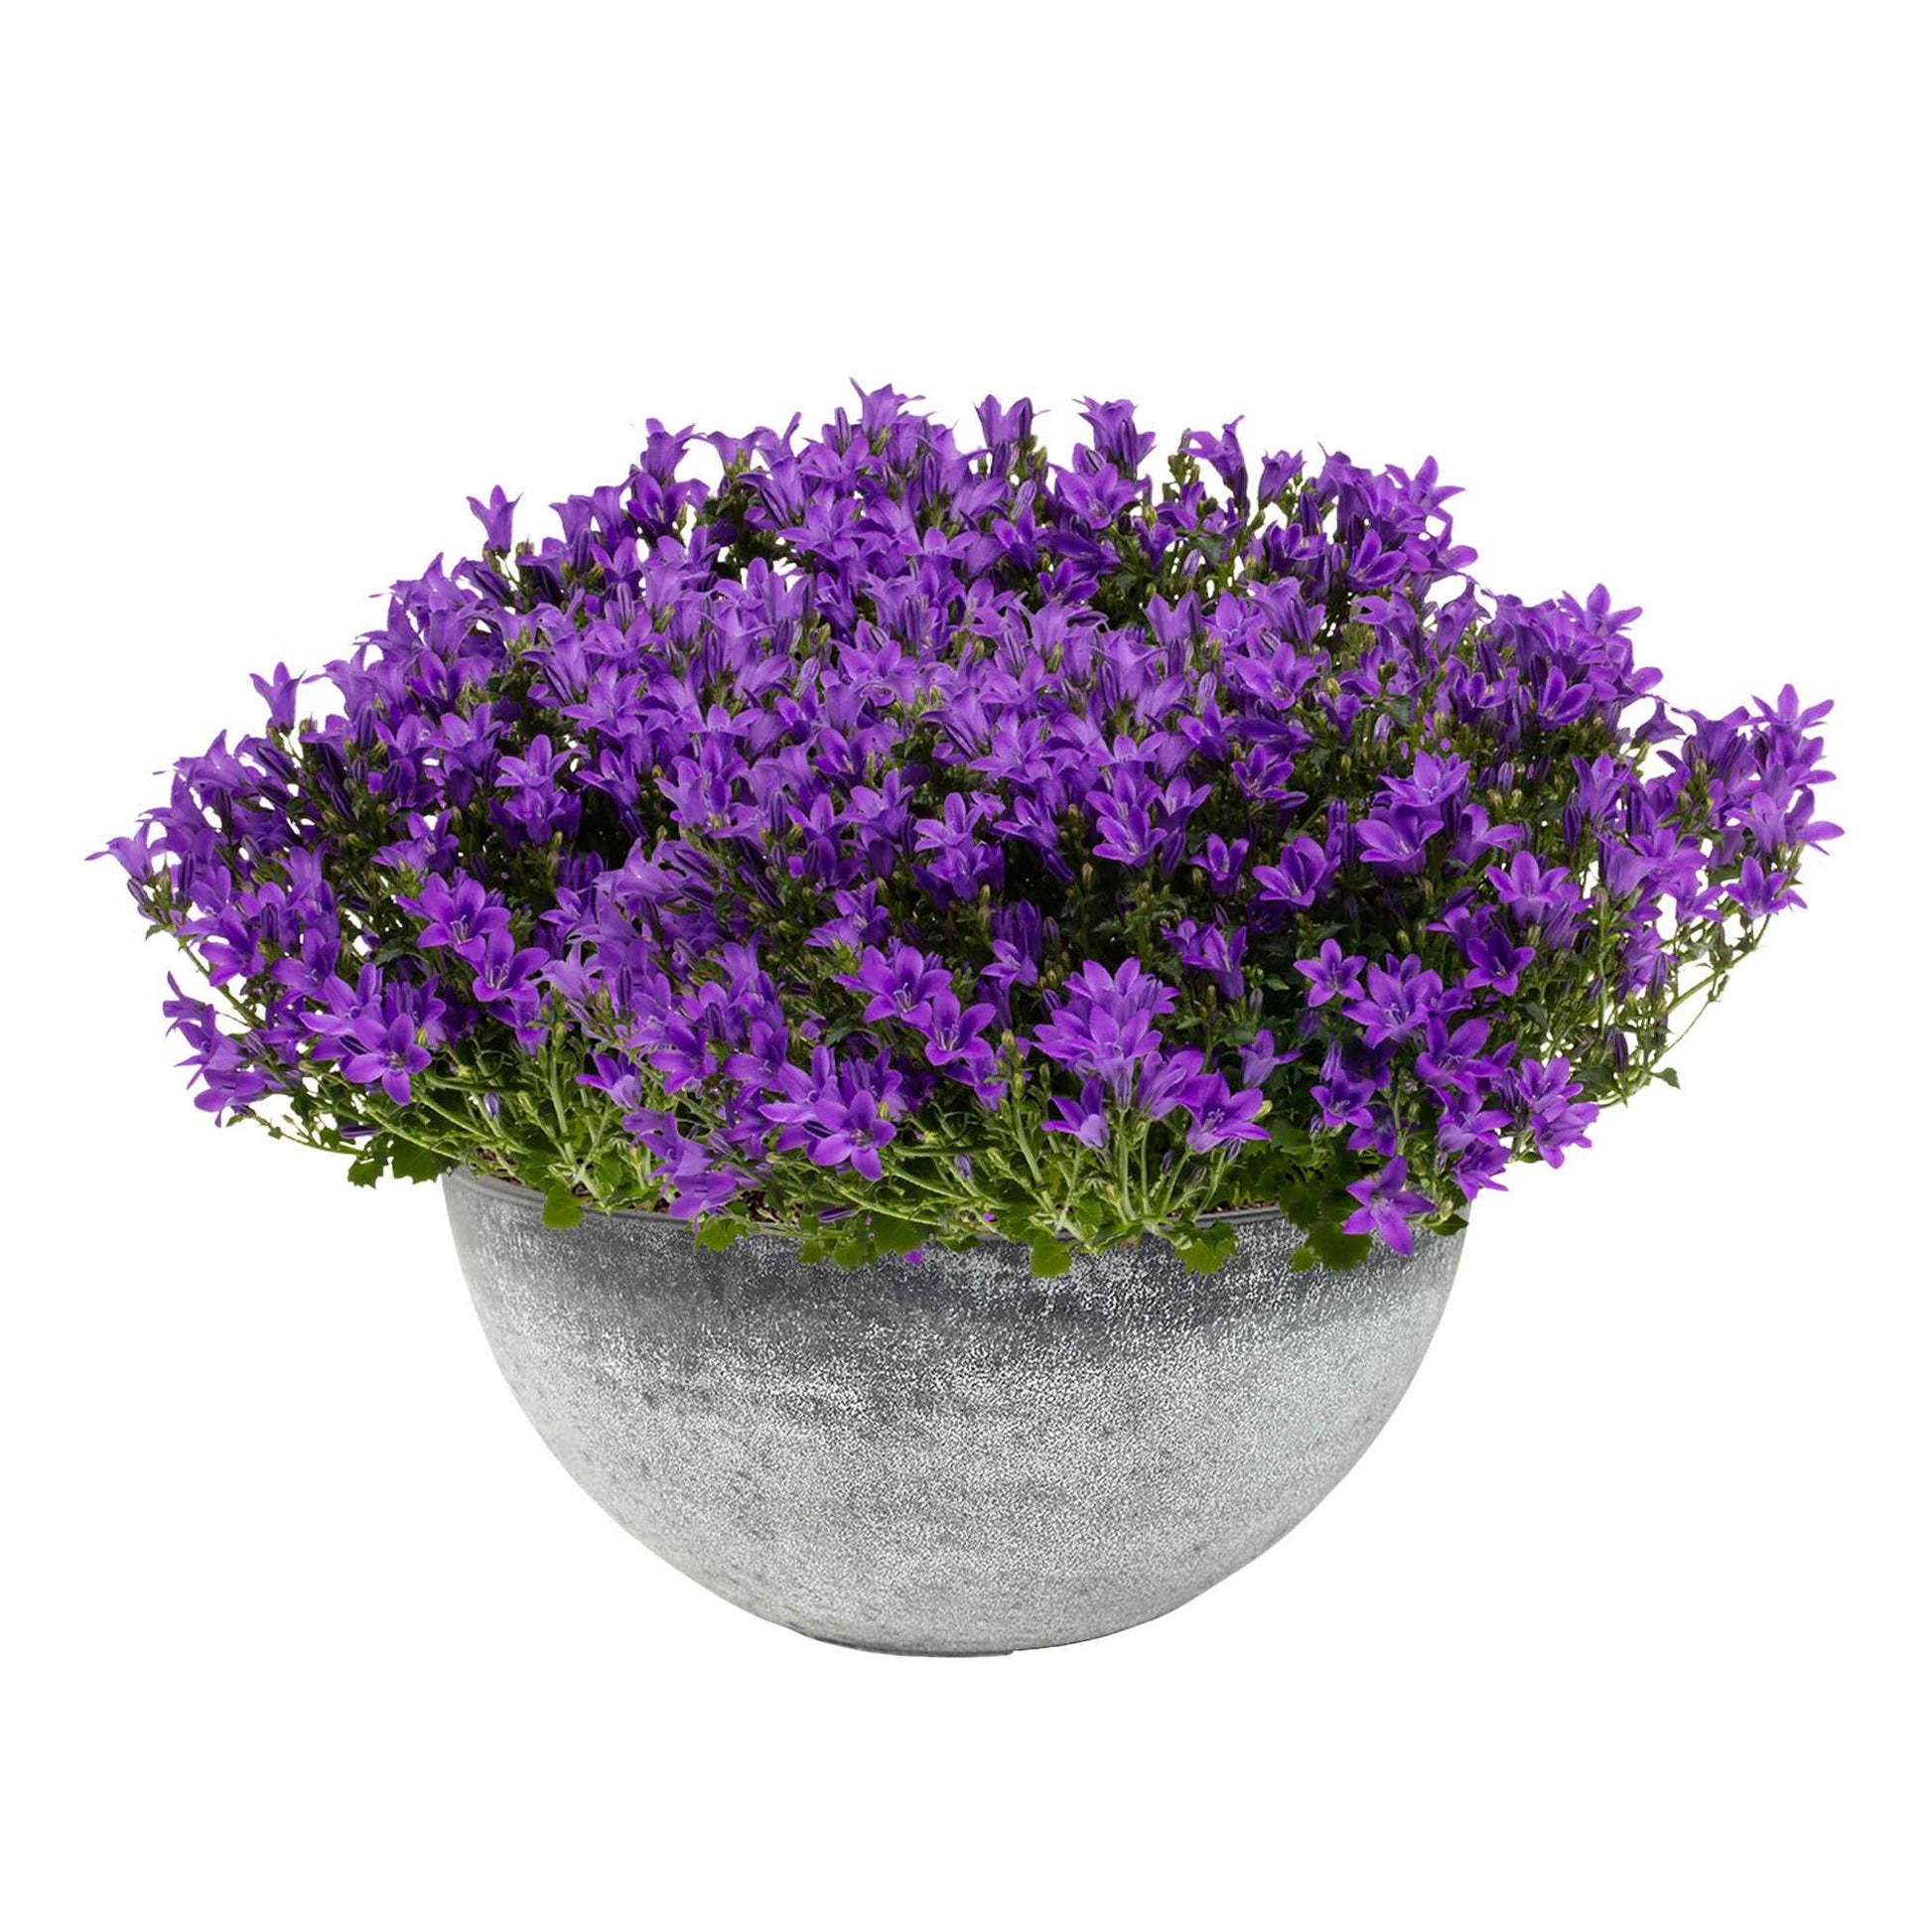 3x Klokjesbloem Campanula Ambella Intense Purple paars incl. schaal grijs - Alle vaste tuinplanten